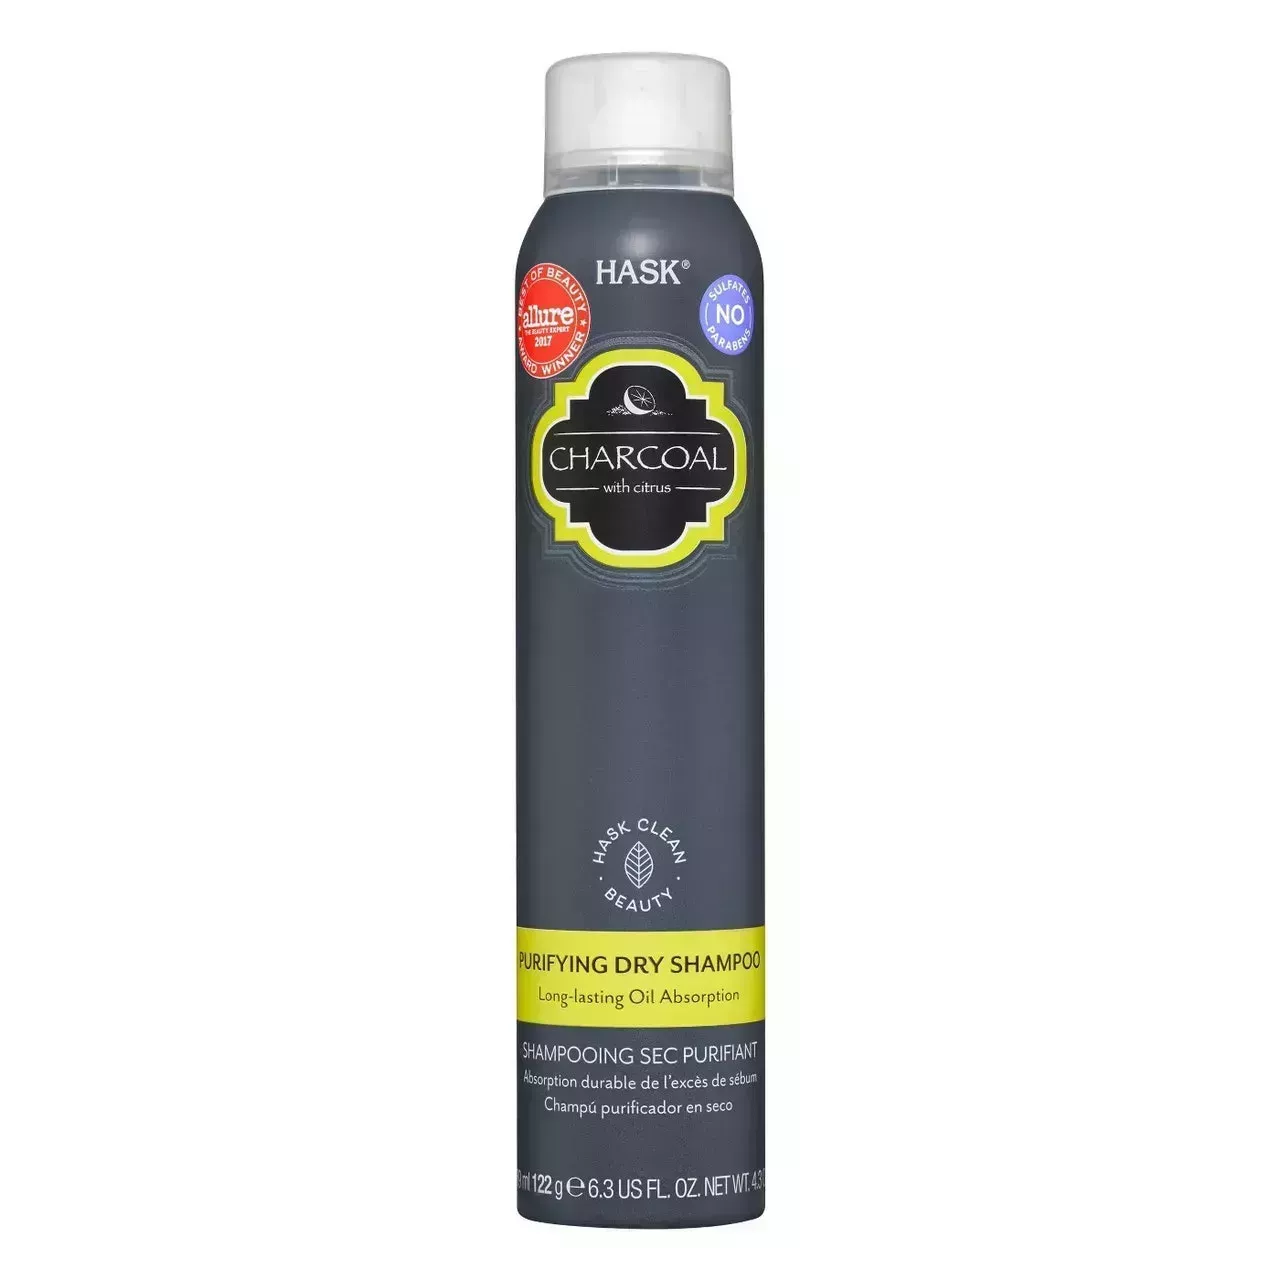 Hask Charcoal Purifying Dry Shampoo bottle on white background